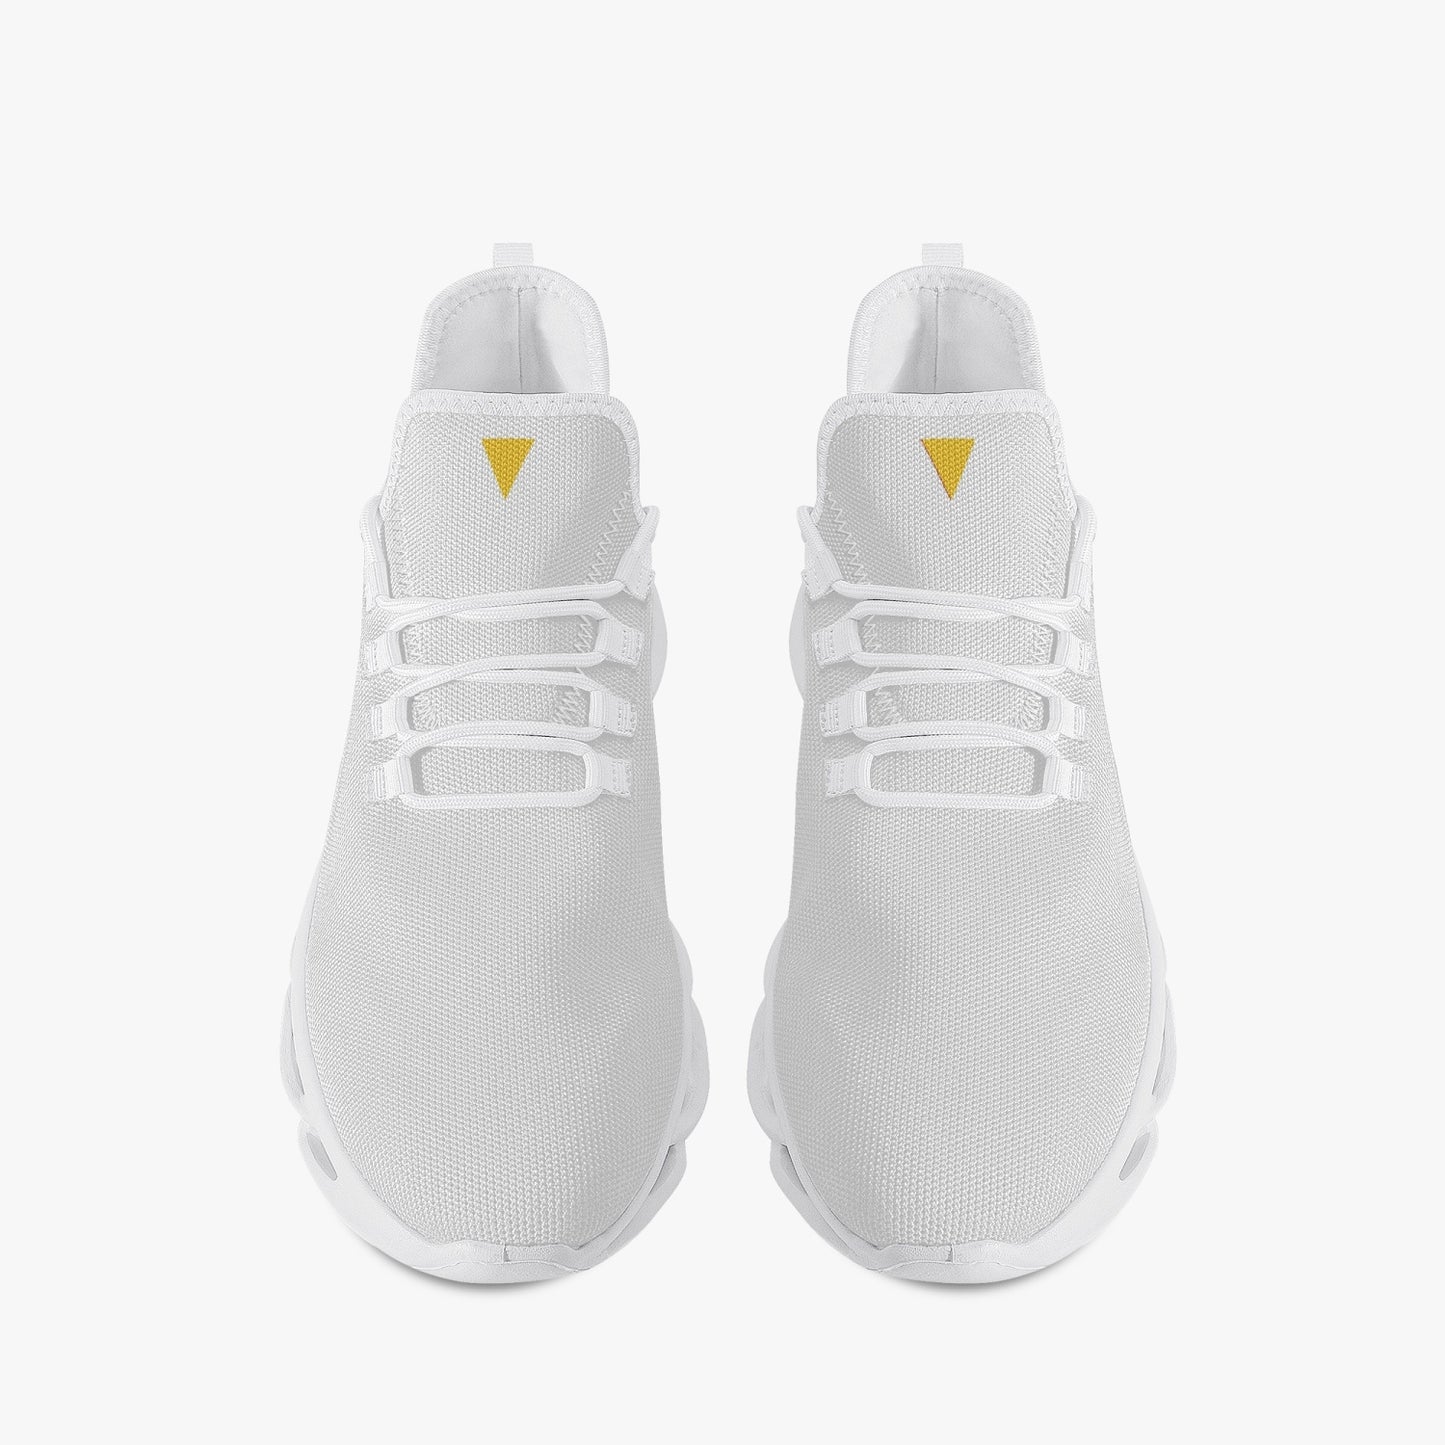 Vluxe Bounce Mesh Knit Sneakers - White/Yellow